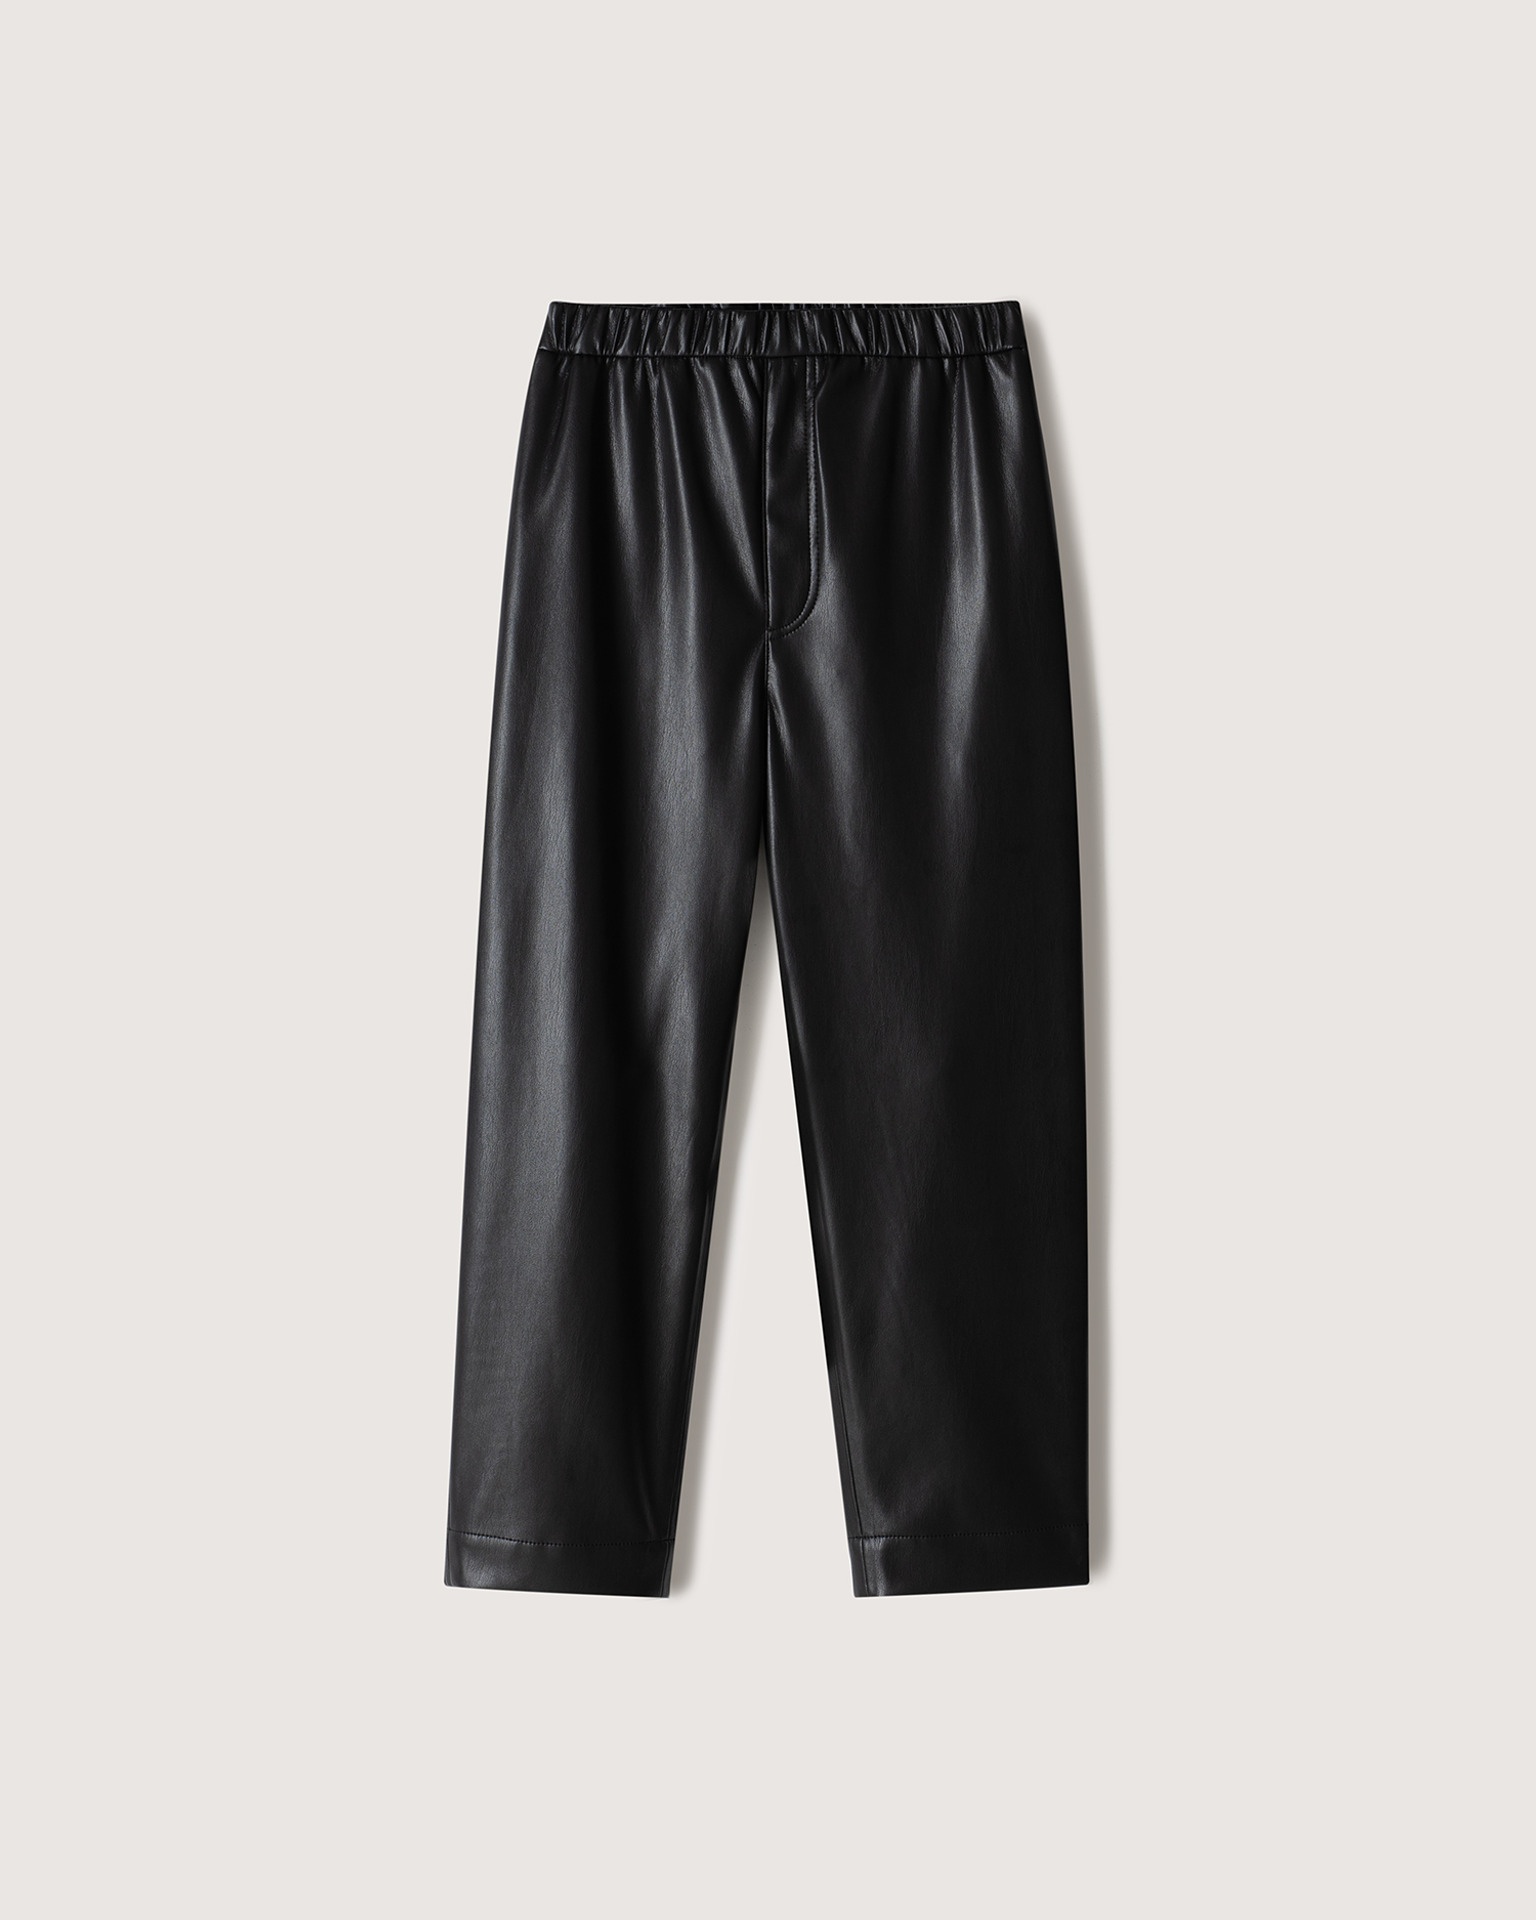 GABE - Vegan leather pants - Black - 1